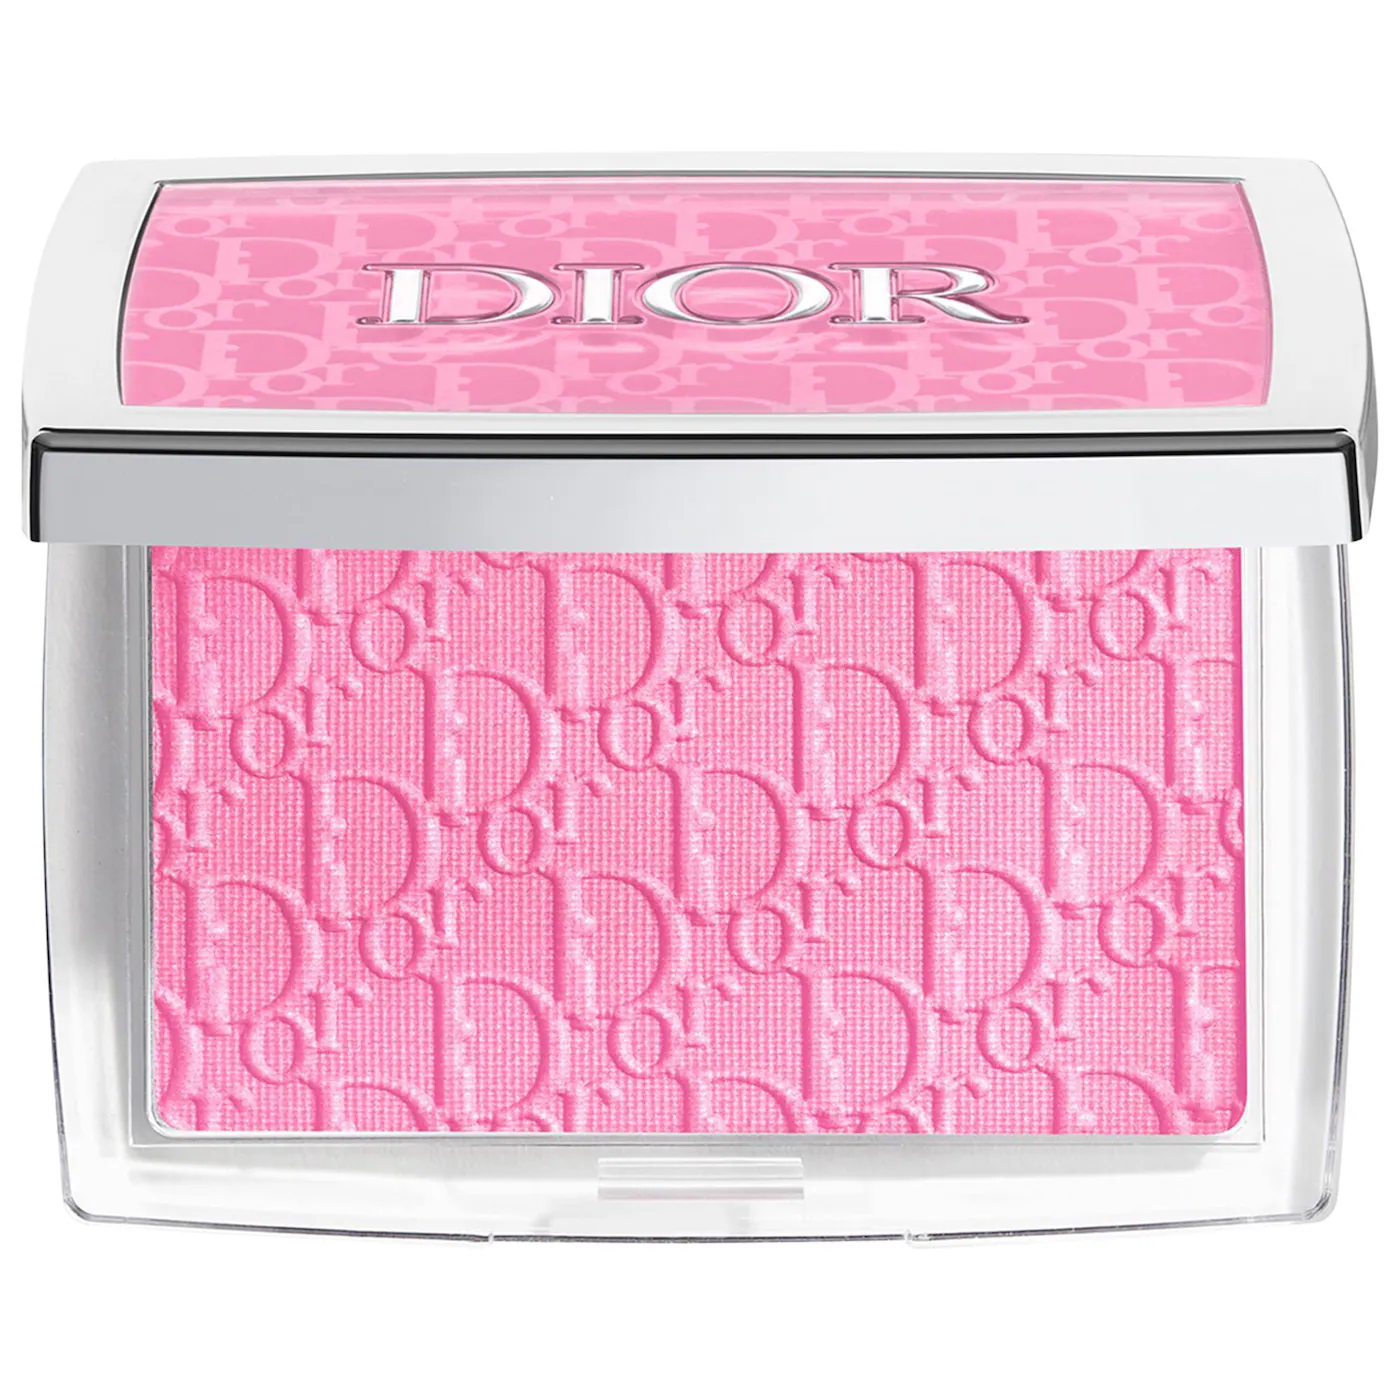 Dior - Универсальные румяна Backstage Rosy Glow Blush - Фото 1